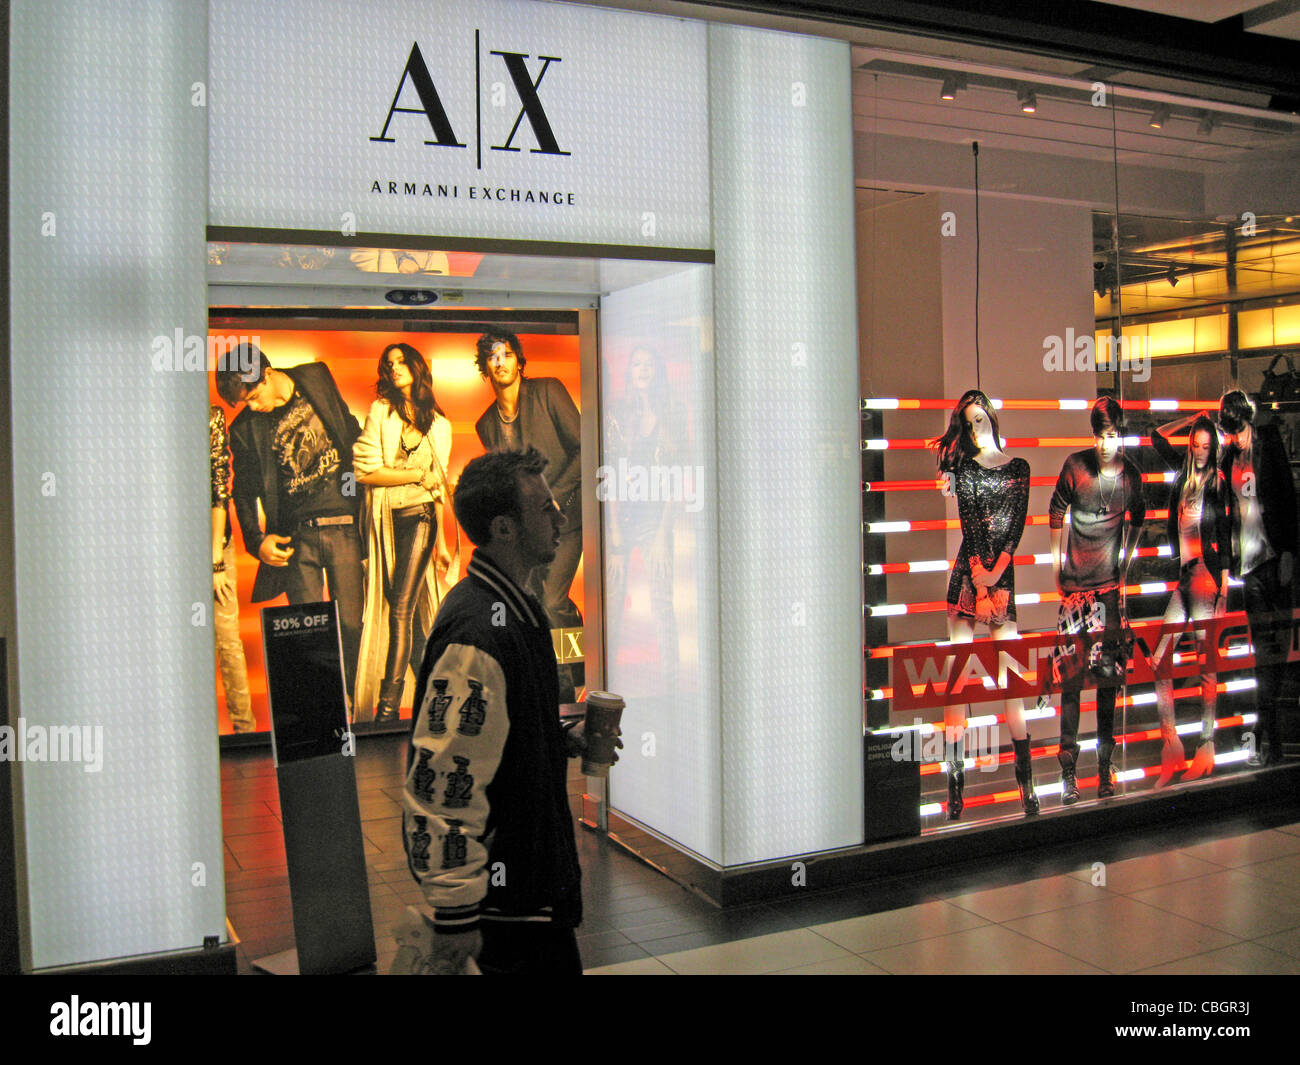 AX Armani Exchange store in Toronto 